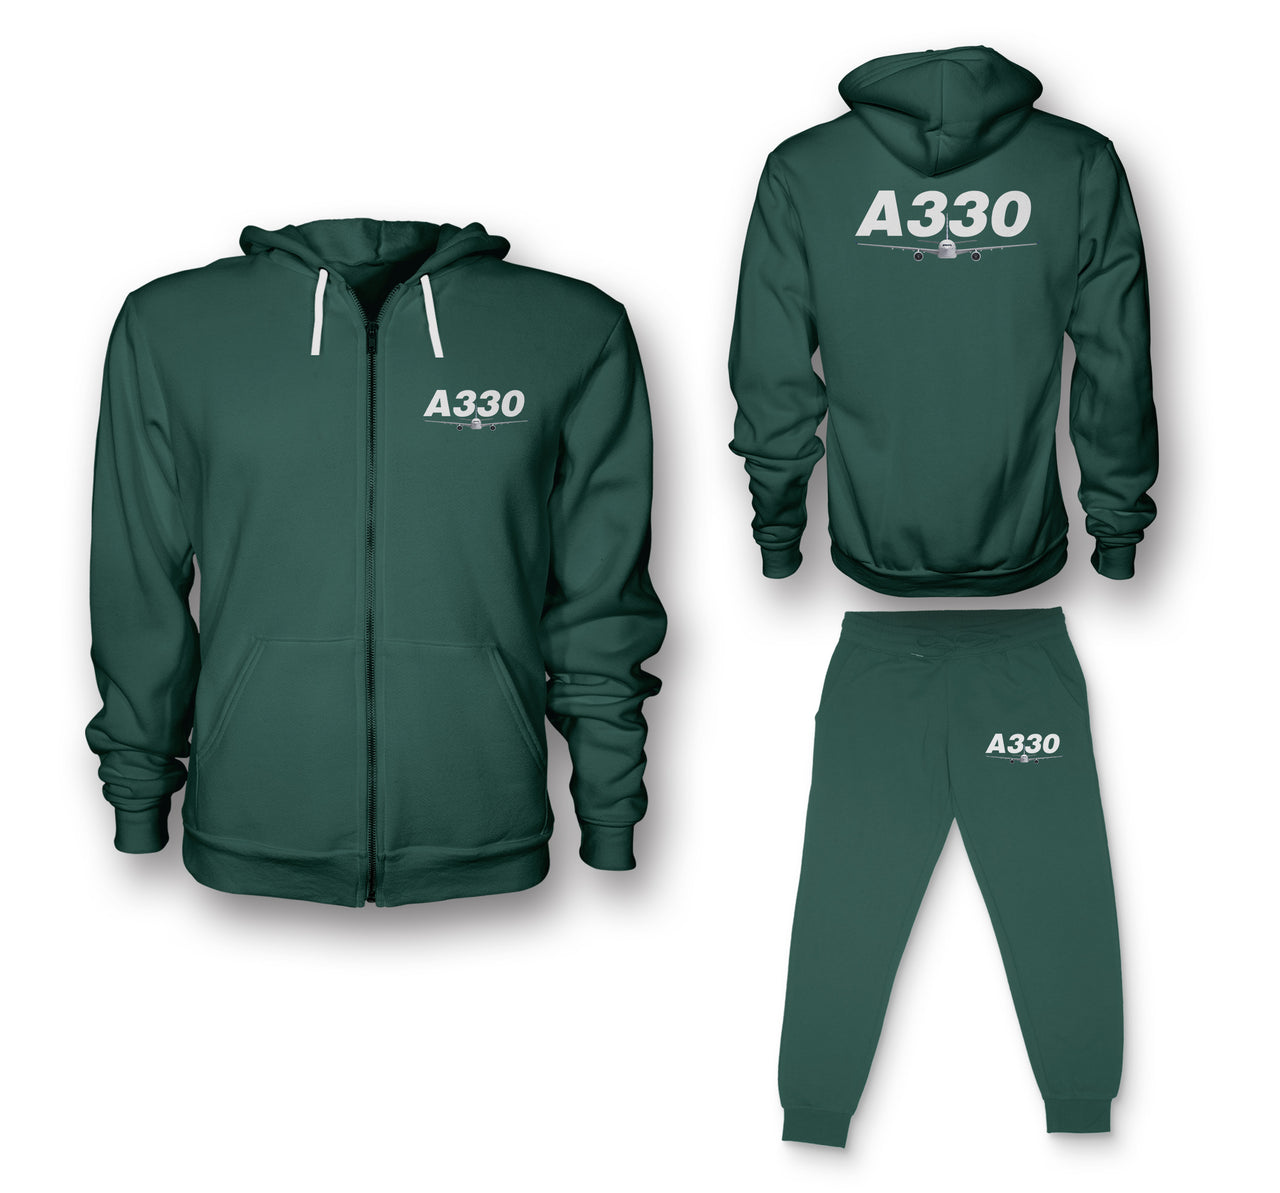 Super Airbus A330 Designed Zipped Hoodies & Sweatpants Set